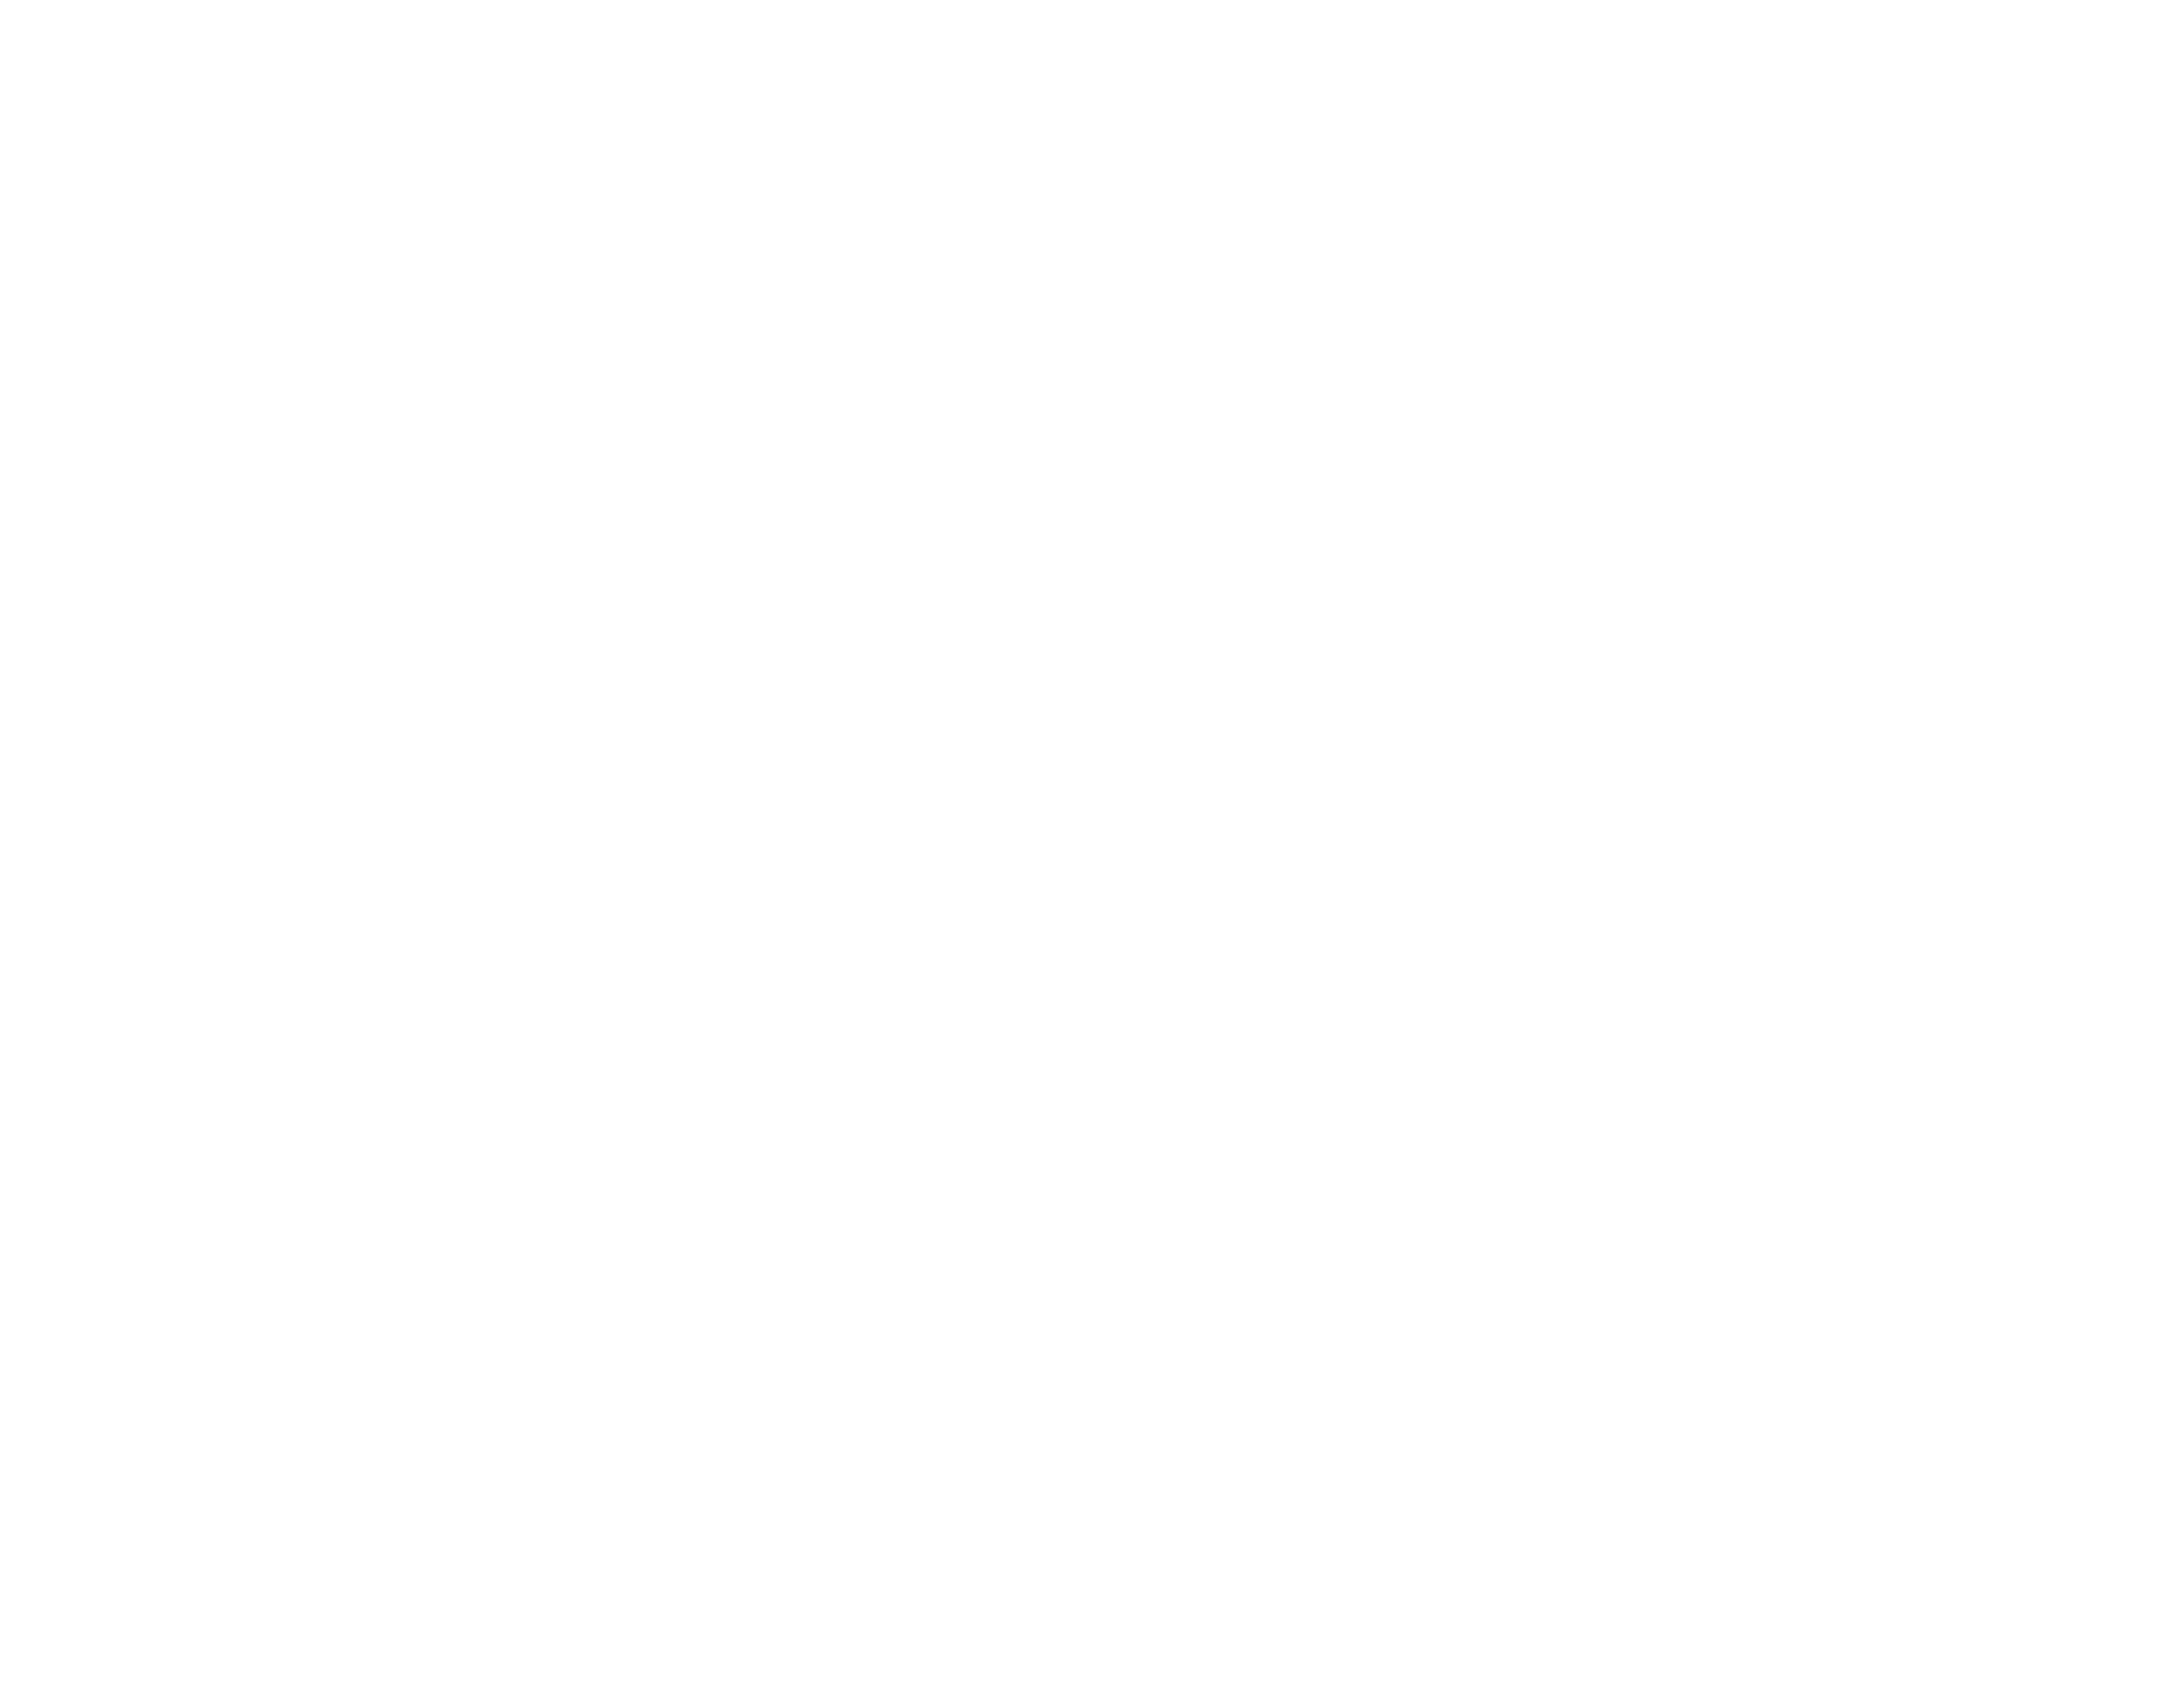 Noble Jones